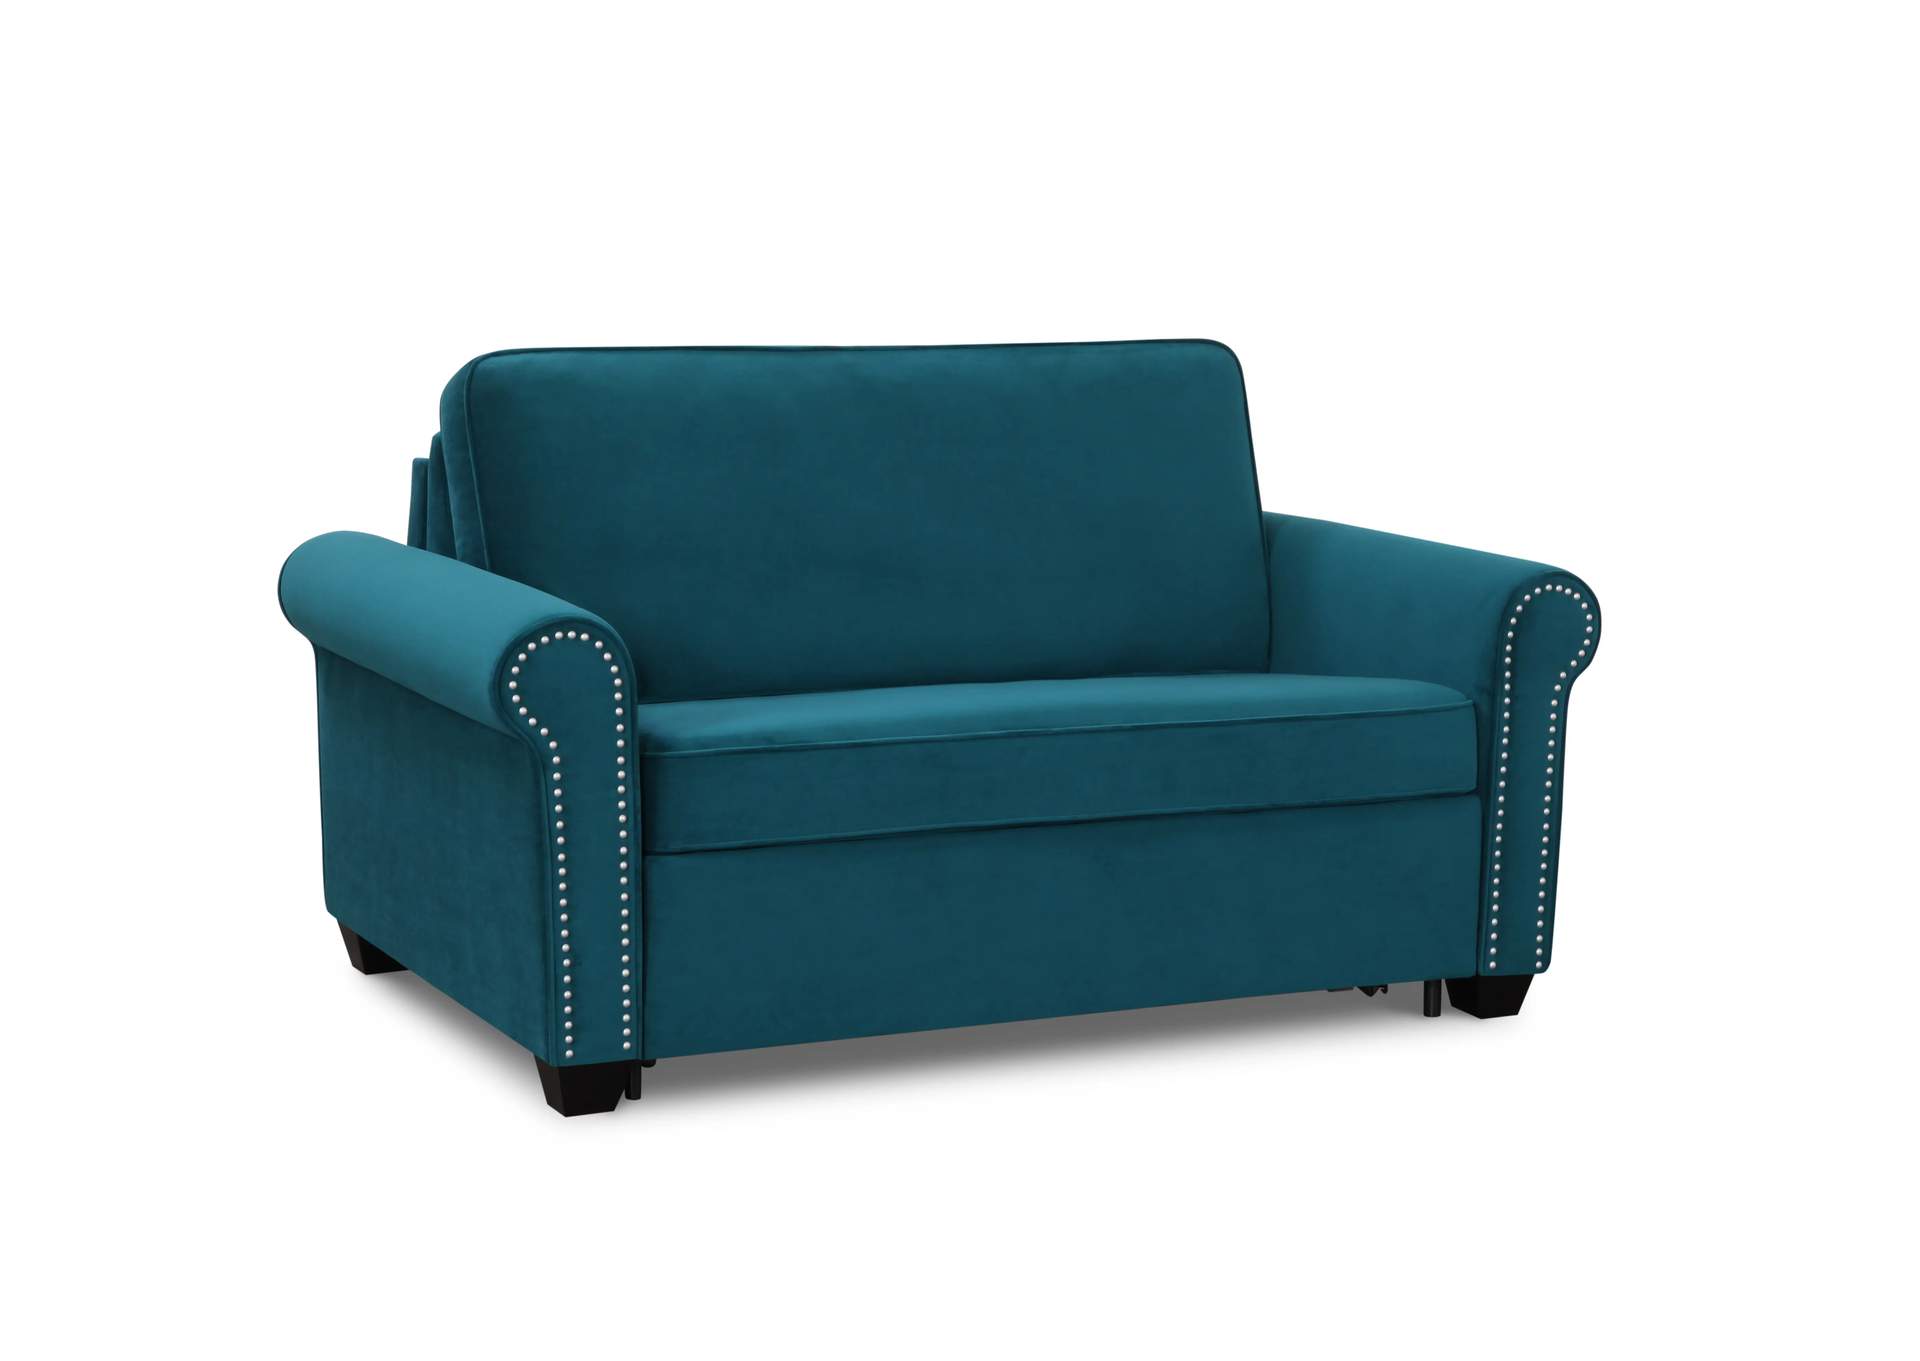 Swinden Sofabed, Single, 1 Cushion,Palliser Furniture